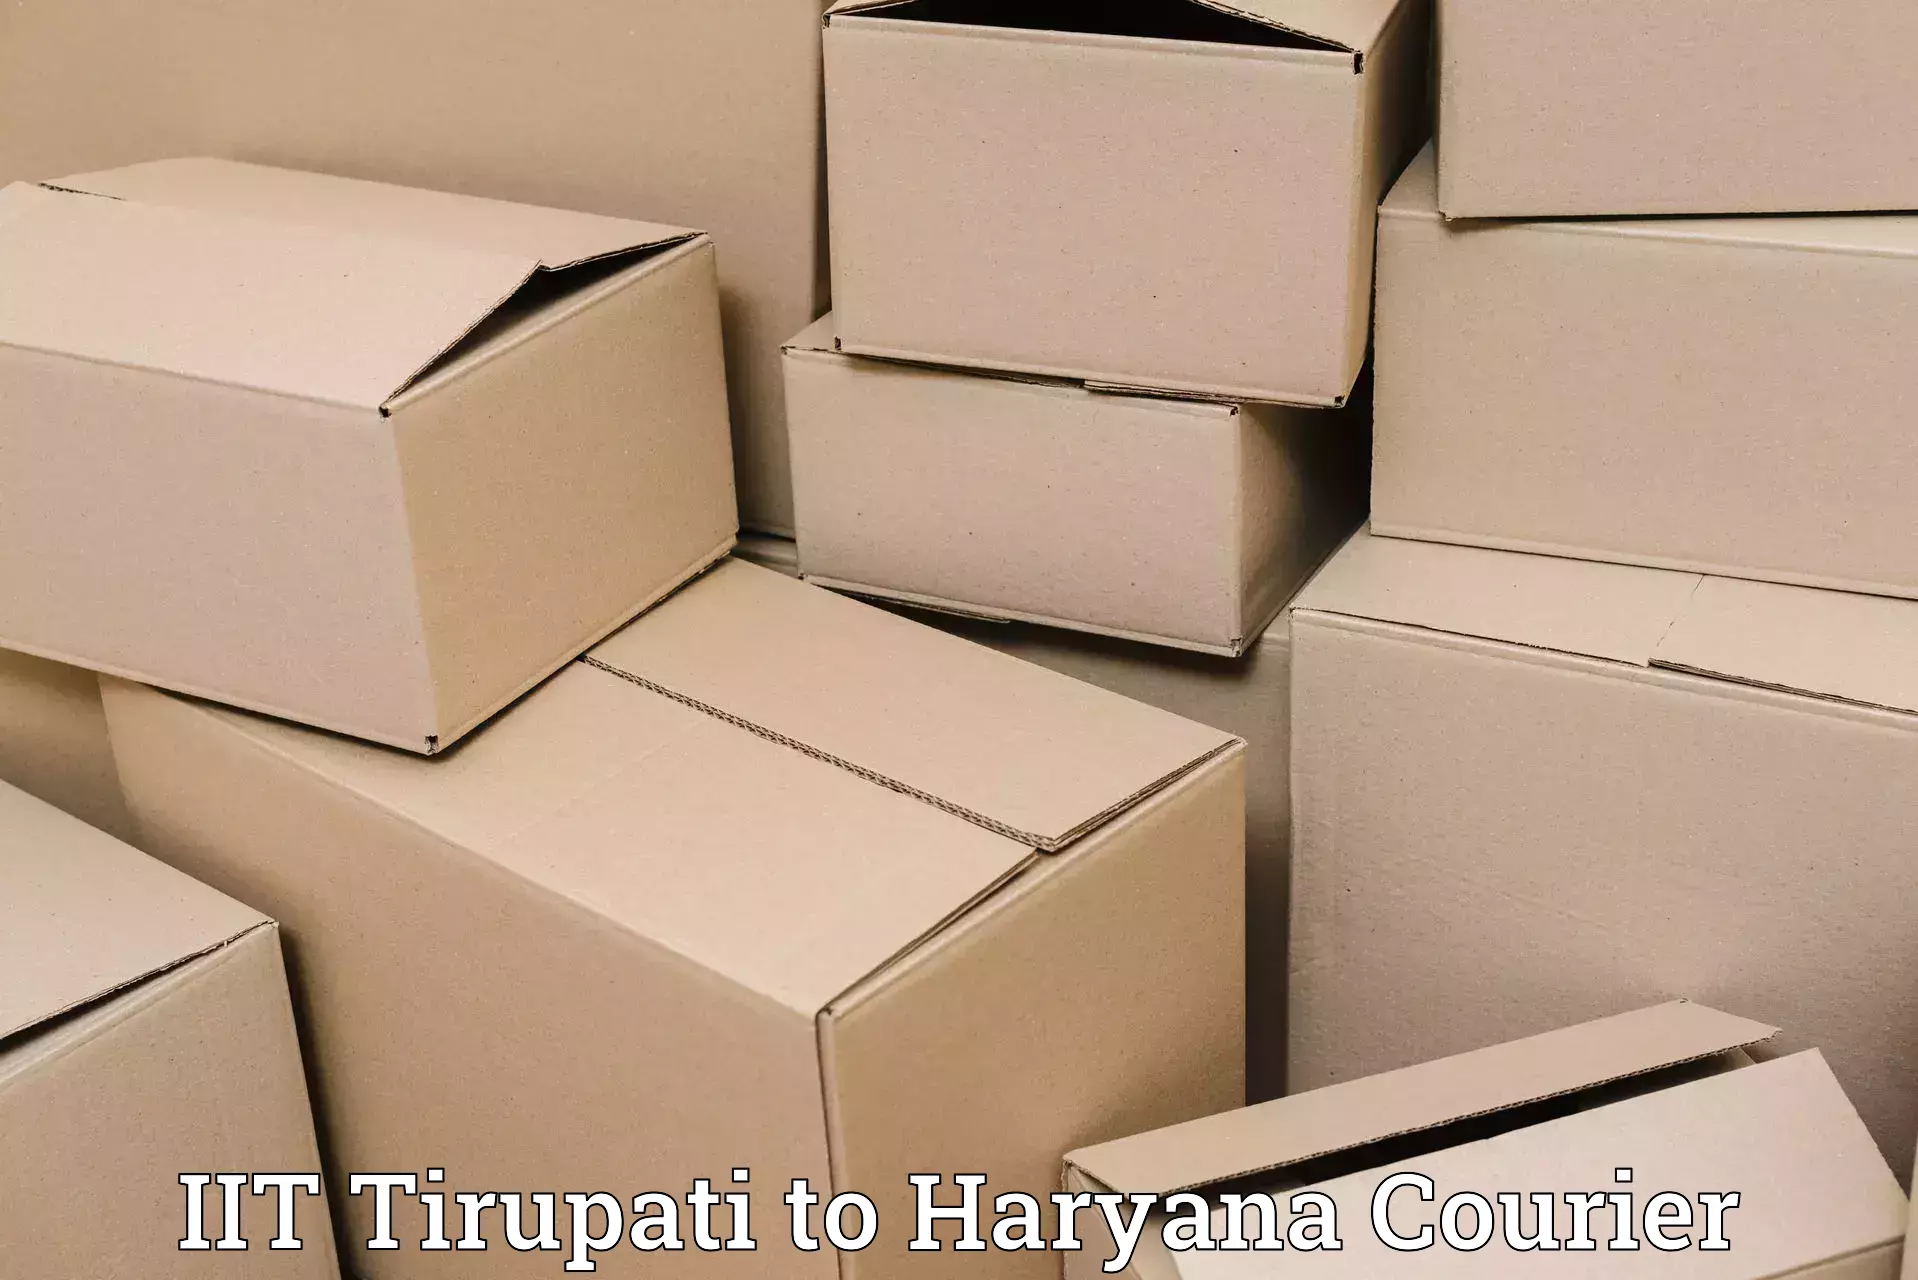 Express courier capabilities IIT Tirupati to Haryana